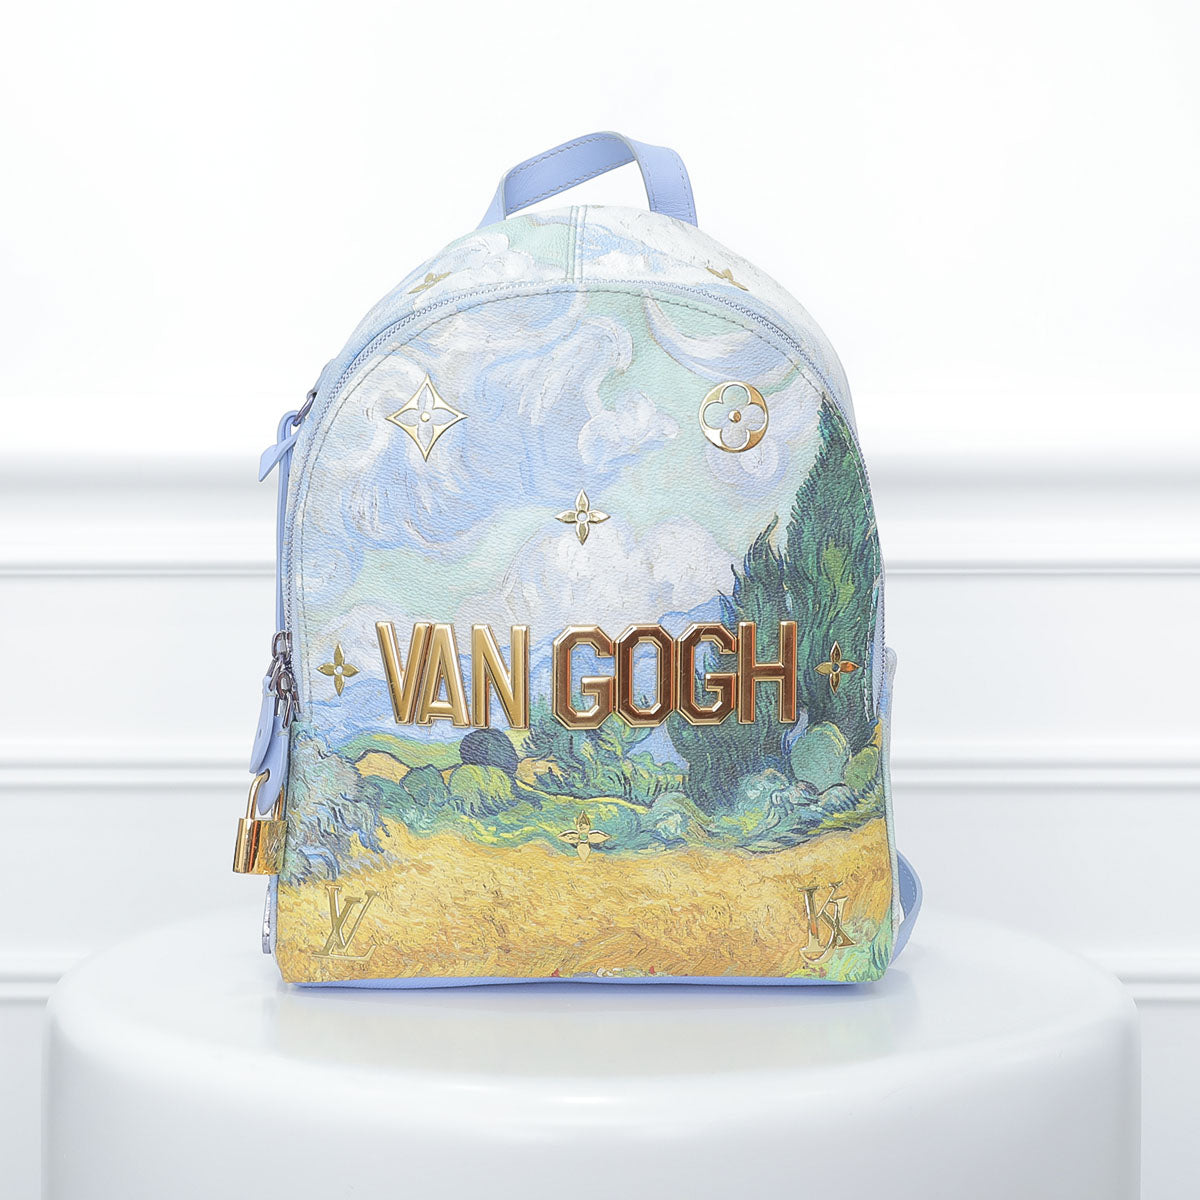 Louis Vuitton X Koons Van Gogh Backpack  Bags, Luxury purses, Louis vuitton  handbags